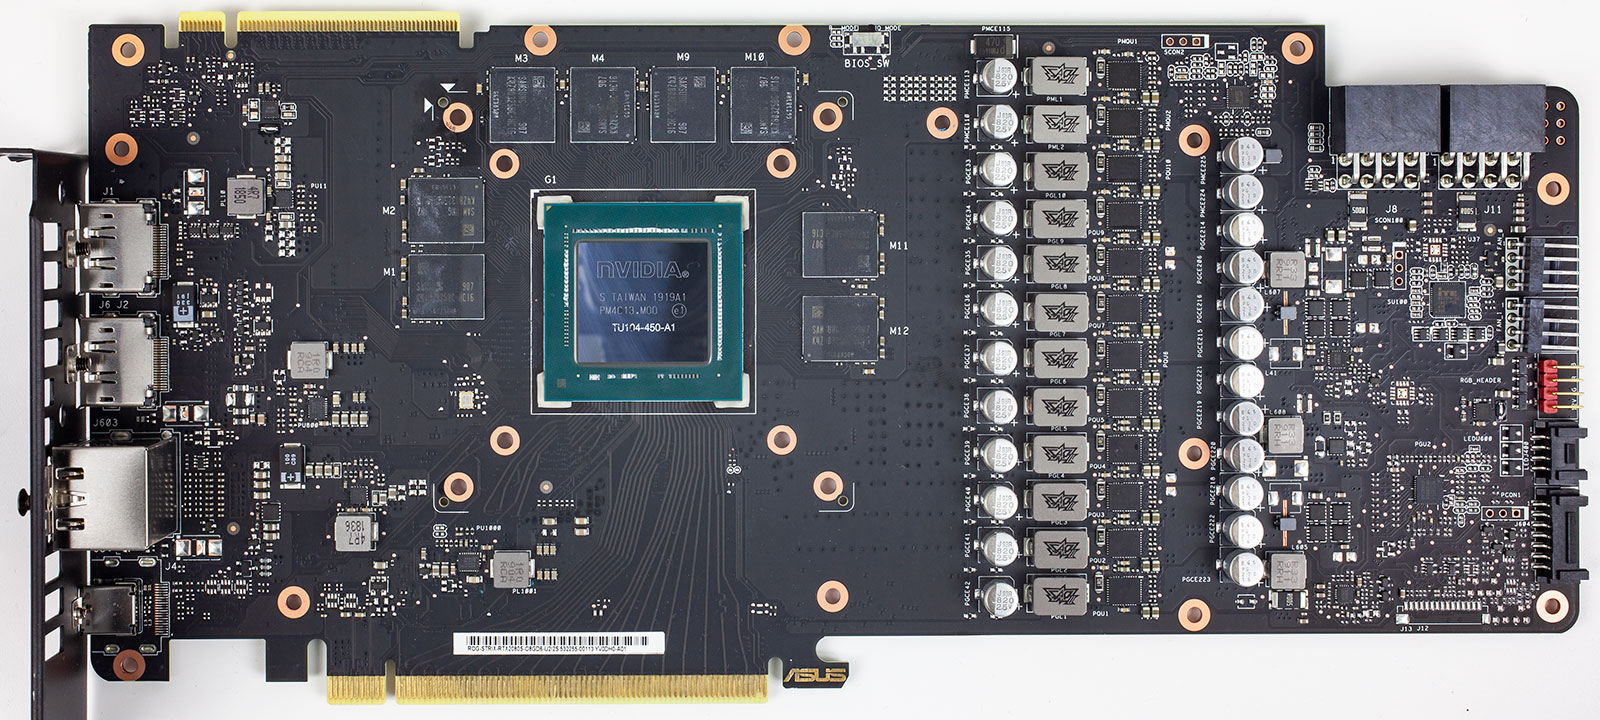 ASUS GeForce RTX 2080 Super STRIX OC Review - Circuit Board